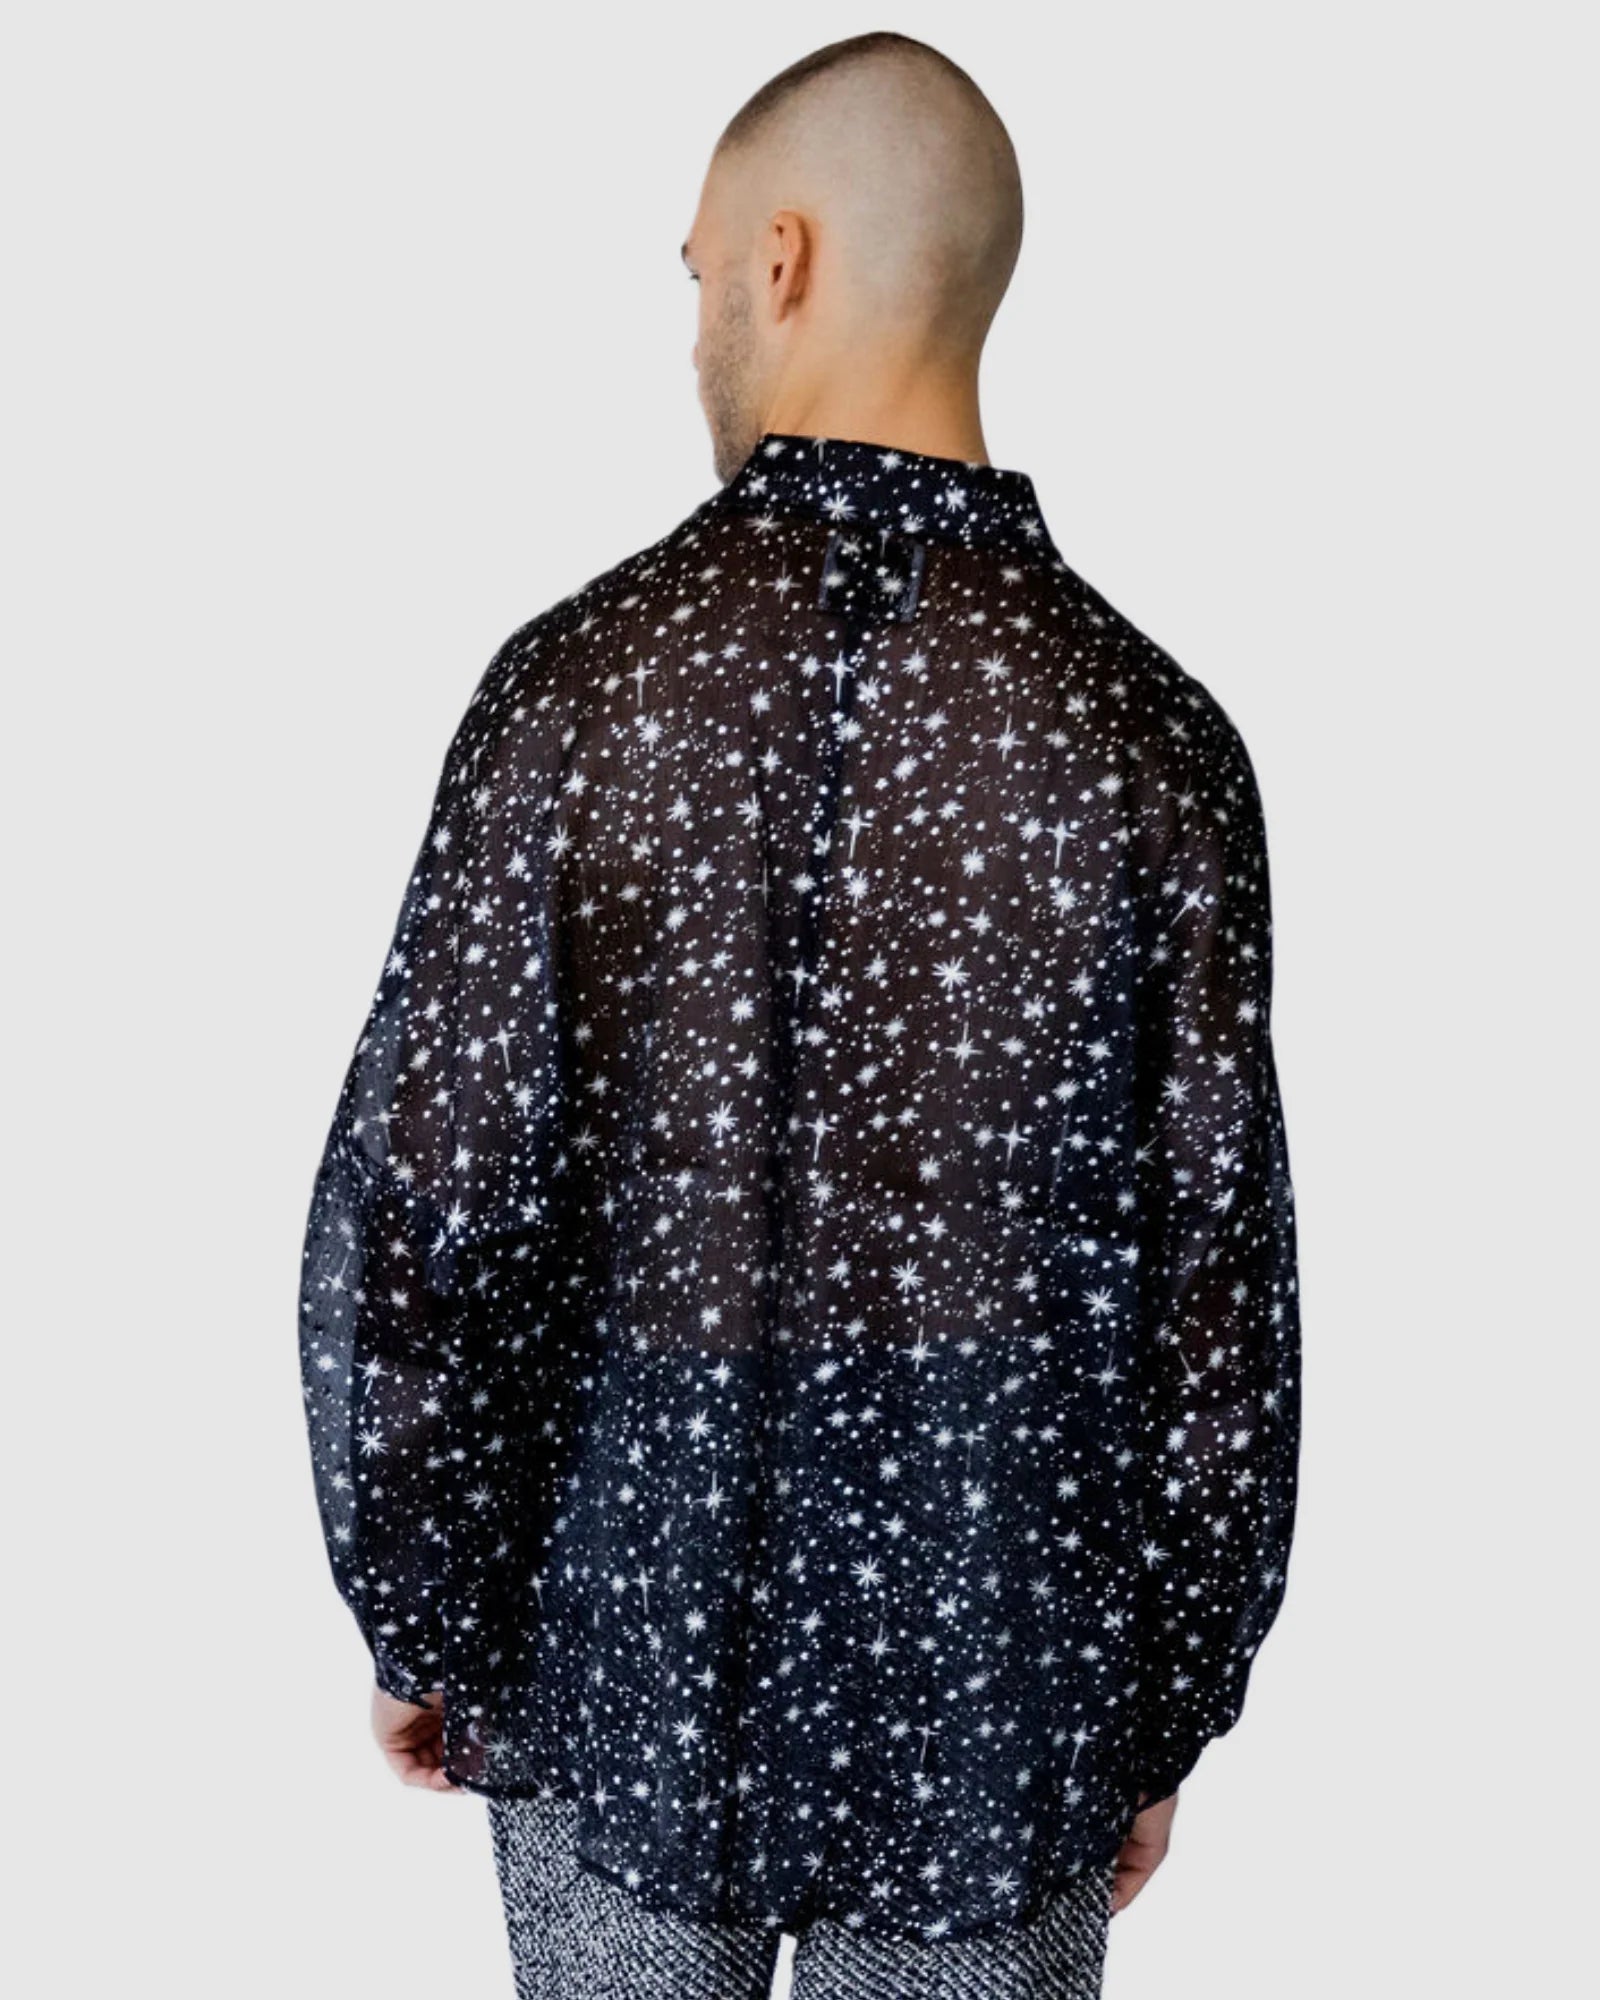 Justin Cassin Starboy Star Sheer Shirt in Black Color 4